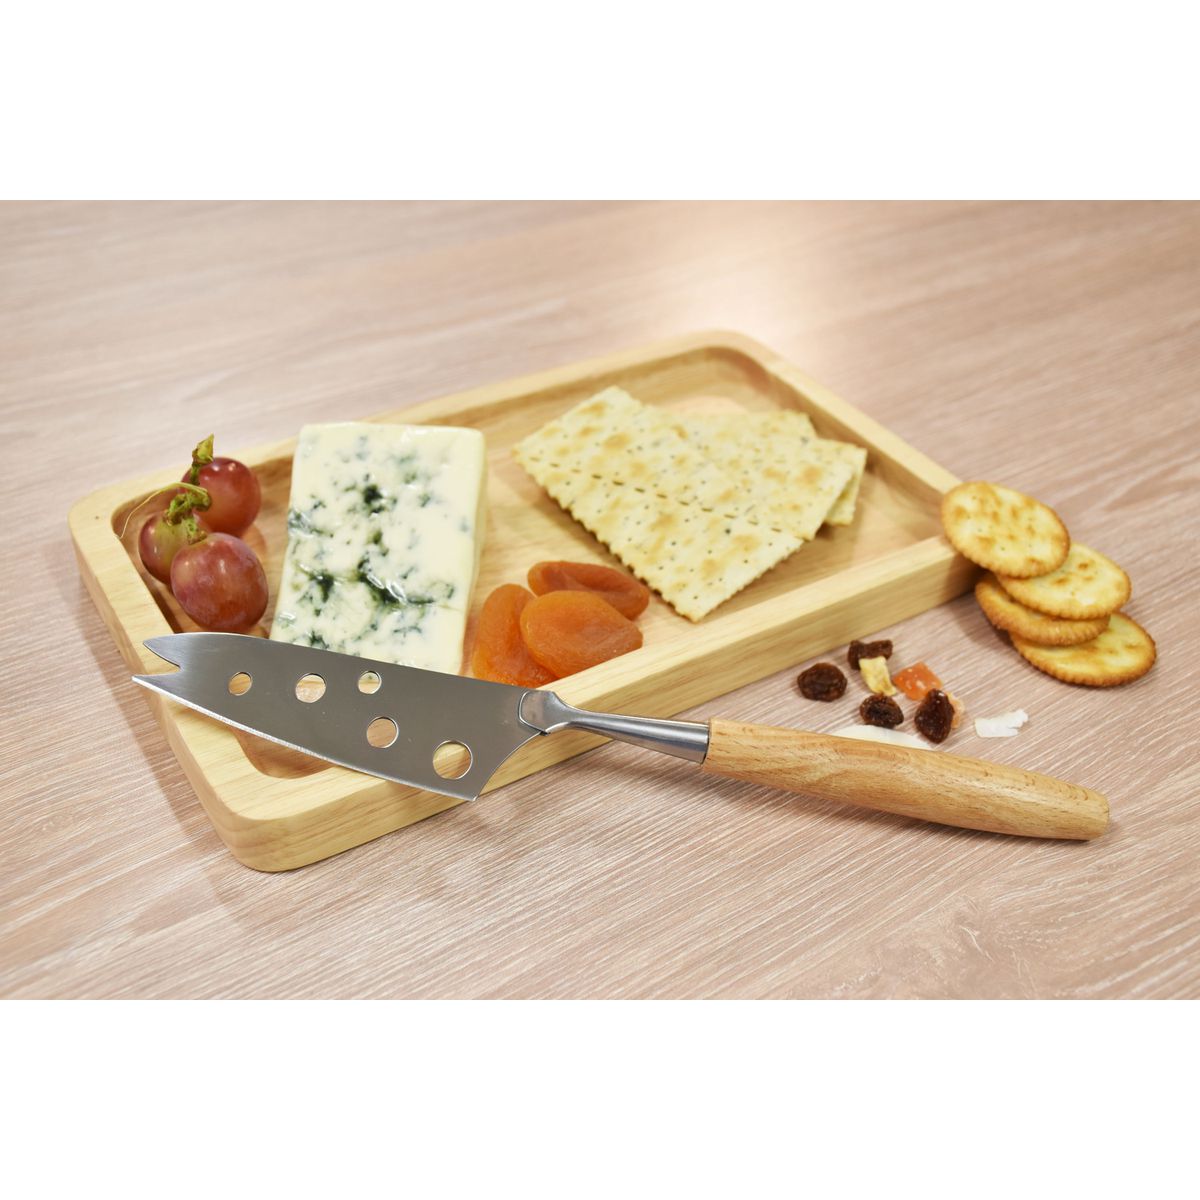 Couteau à fromage Fackelmann Sybarys Gruyère Edition